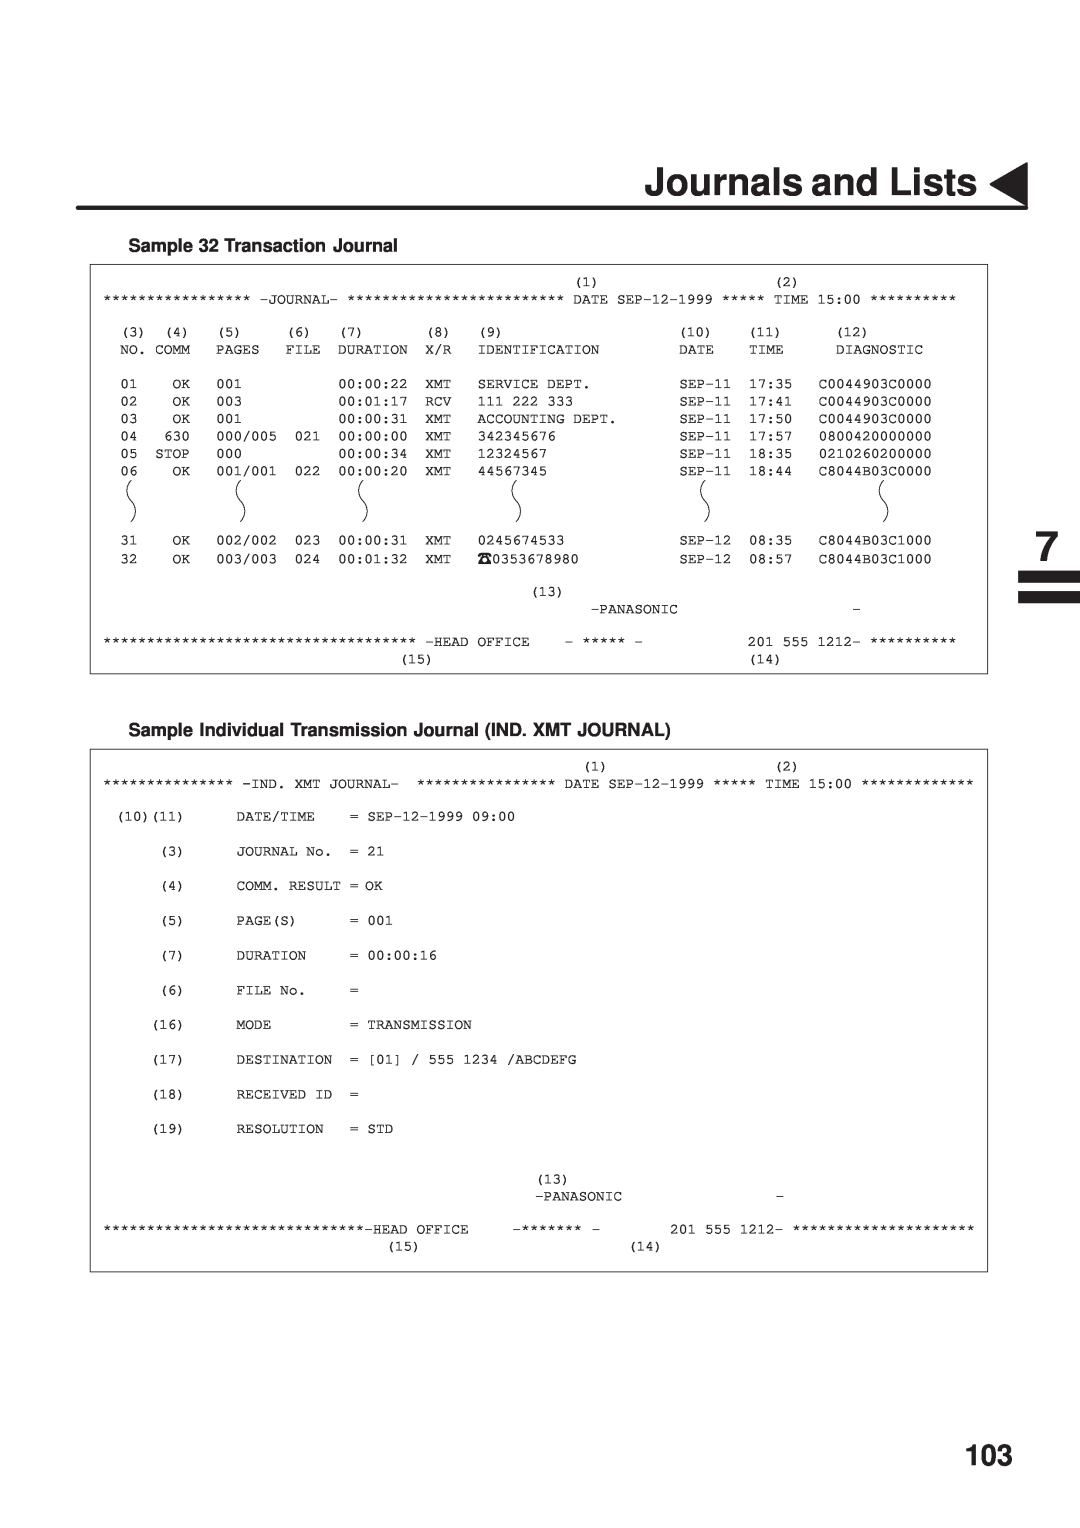 Panasonic UF-333 manual Journals and Lists, Sample 32 Transaction Journal 